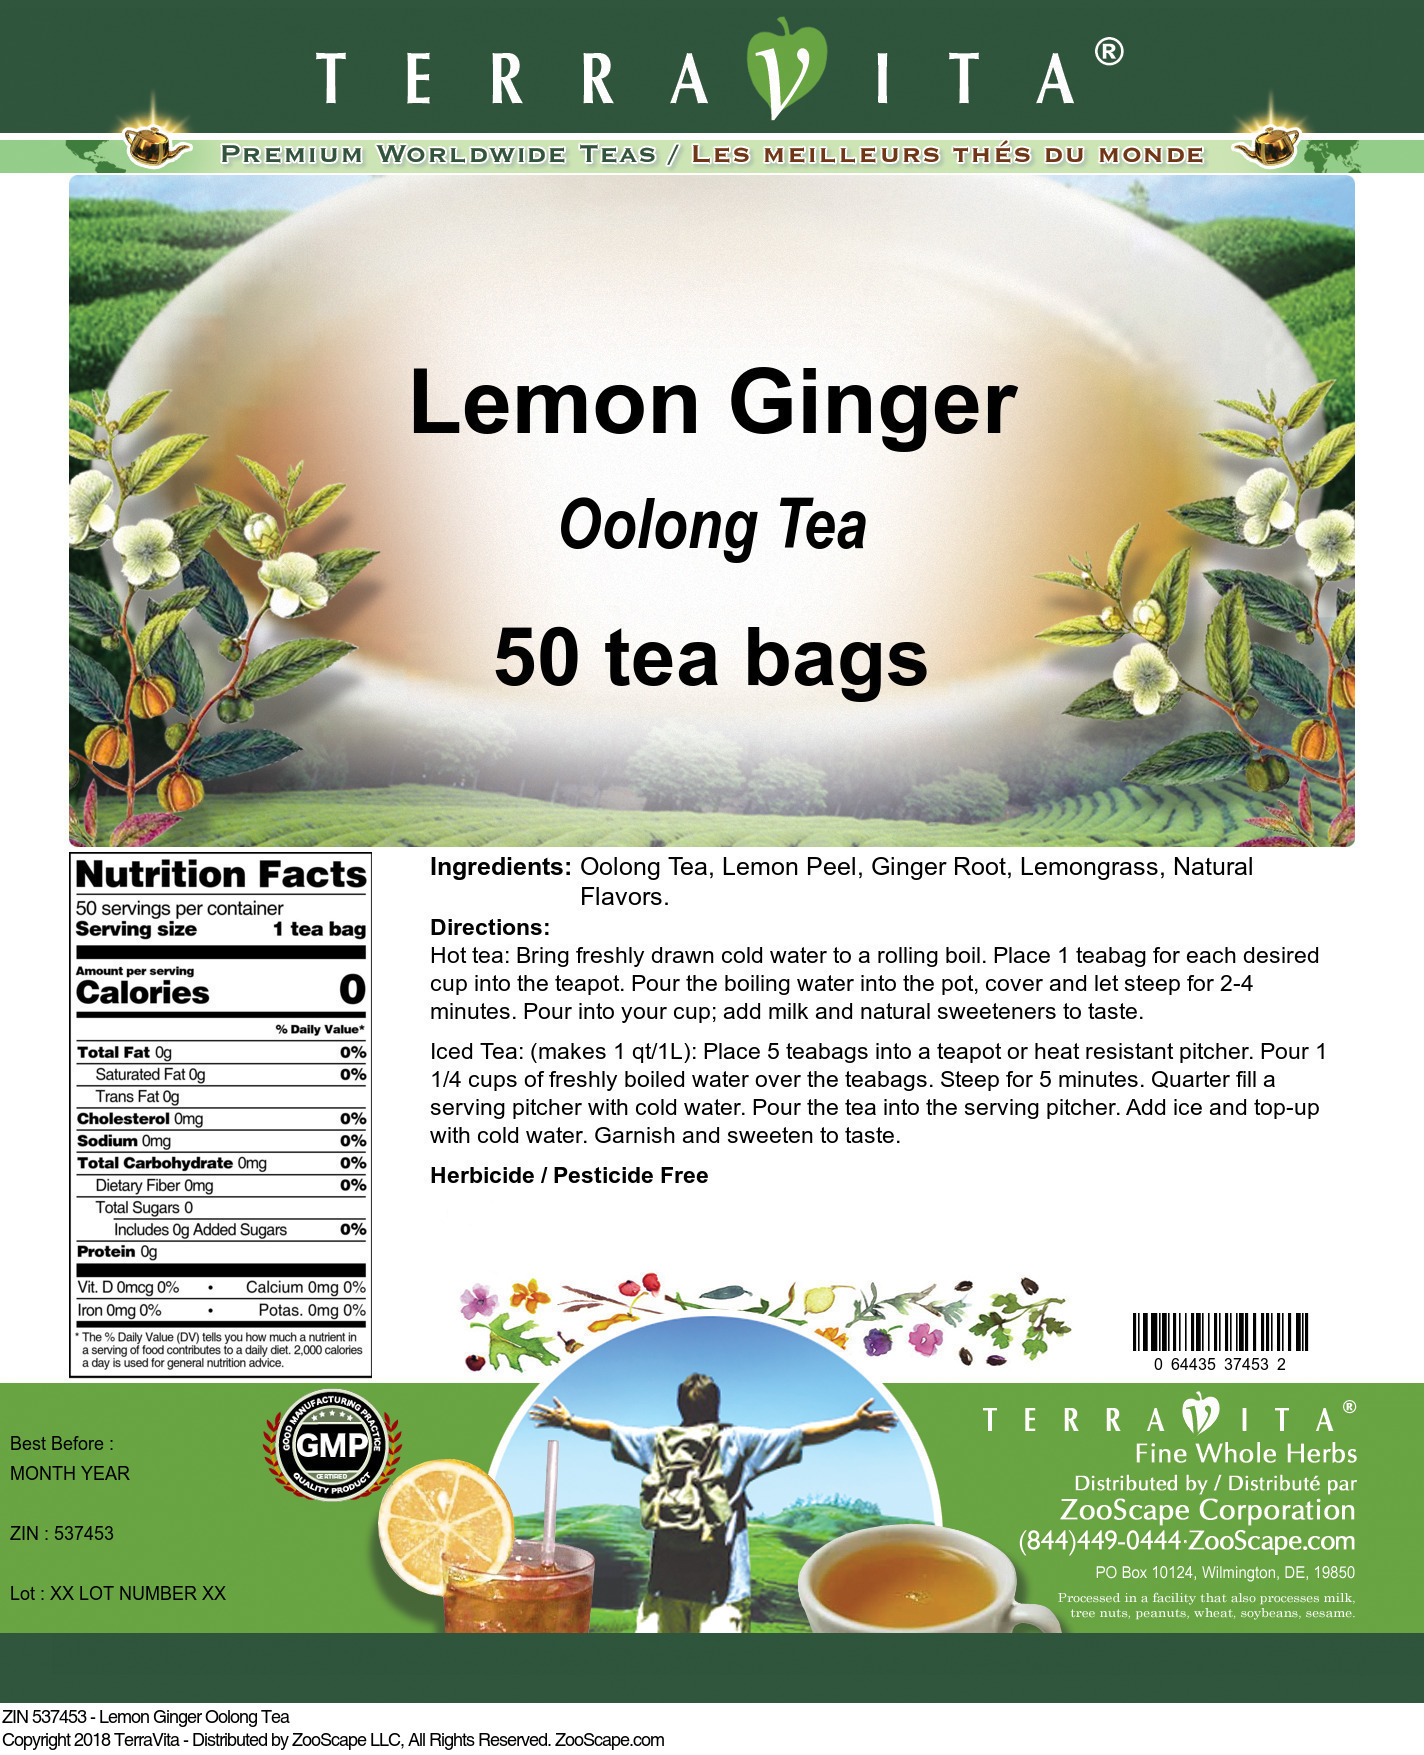 Lemon Ginger Oolong Tea - Label